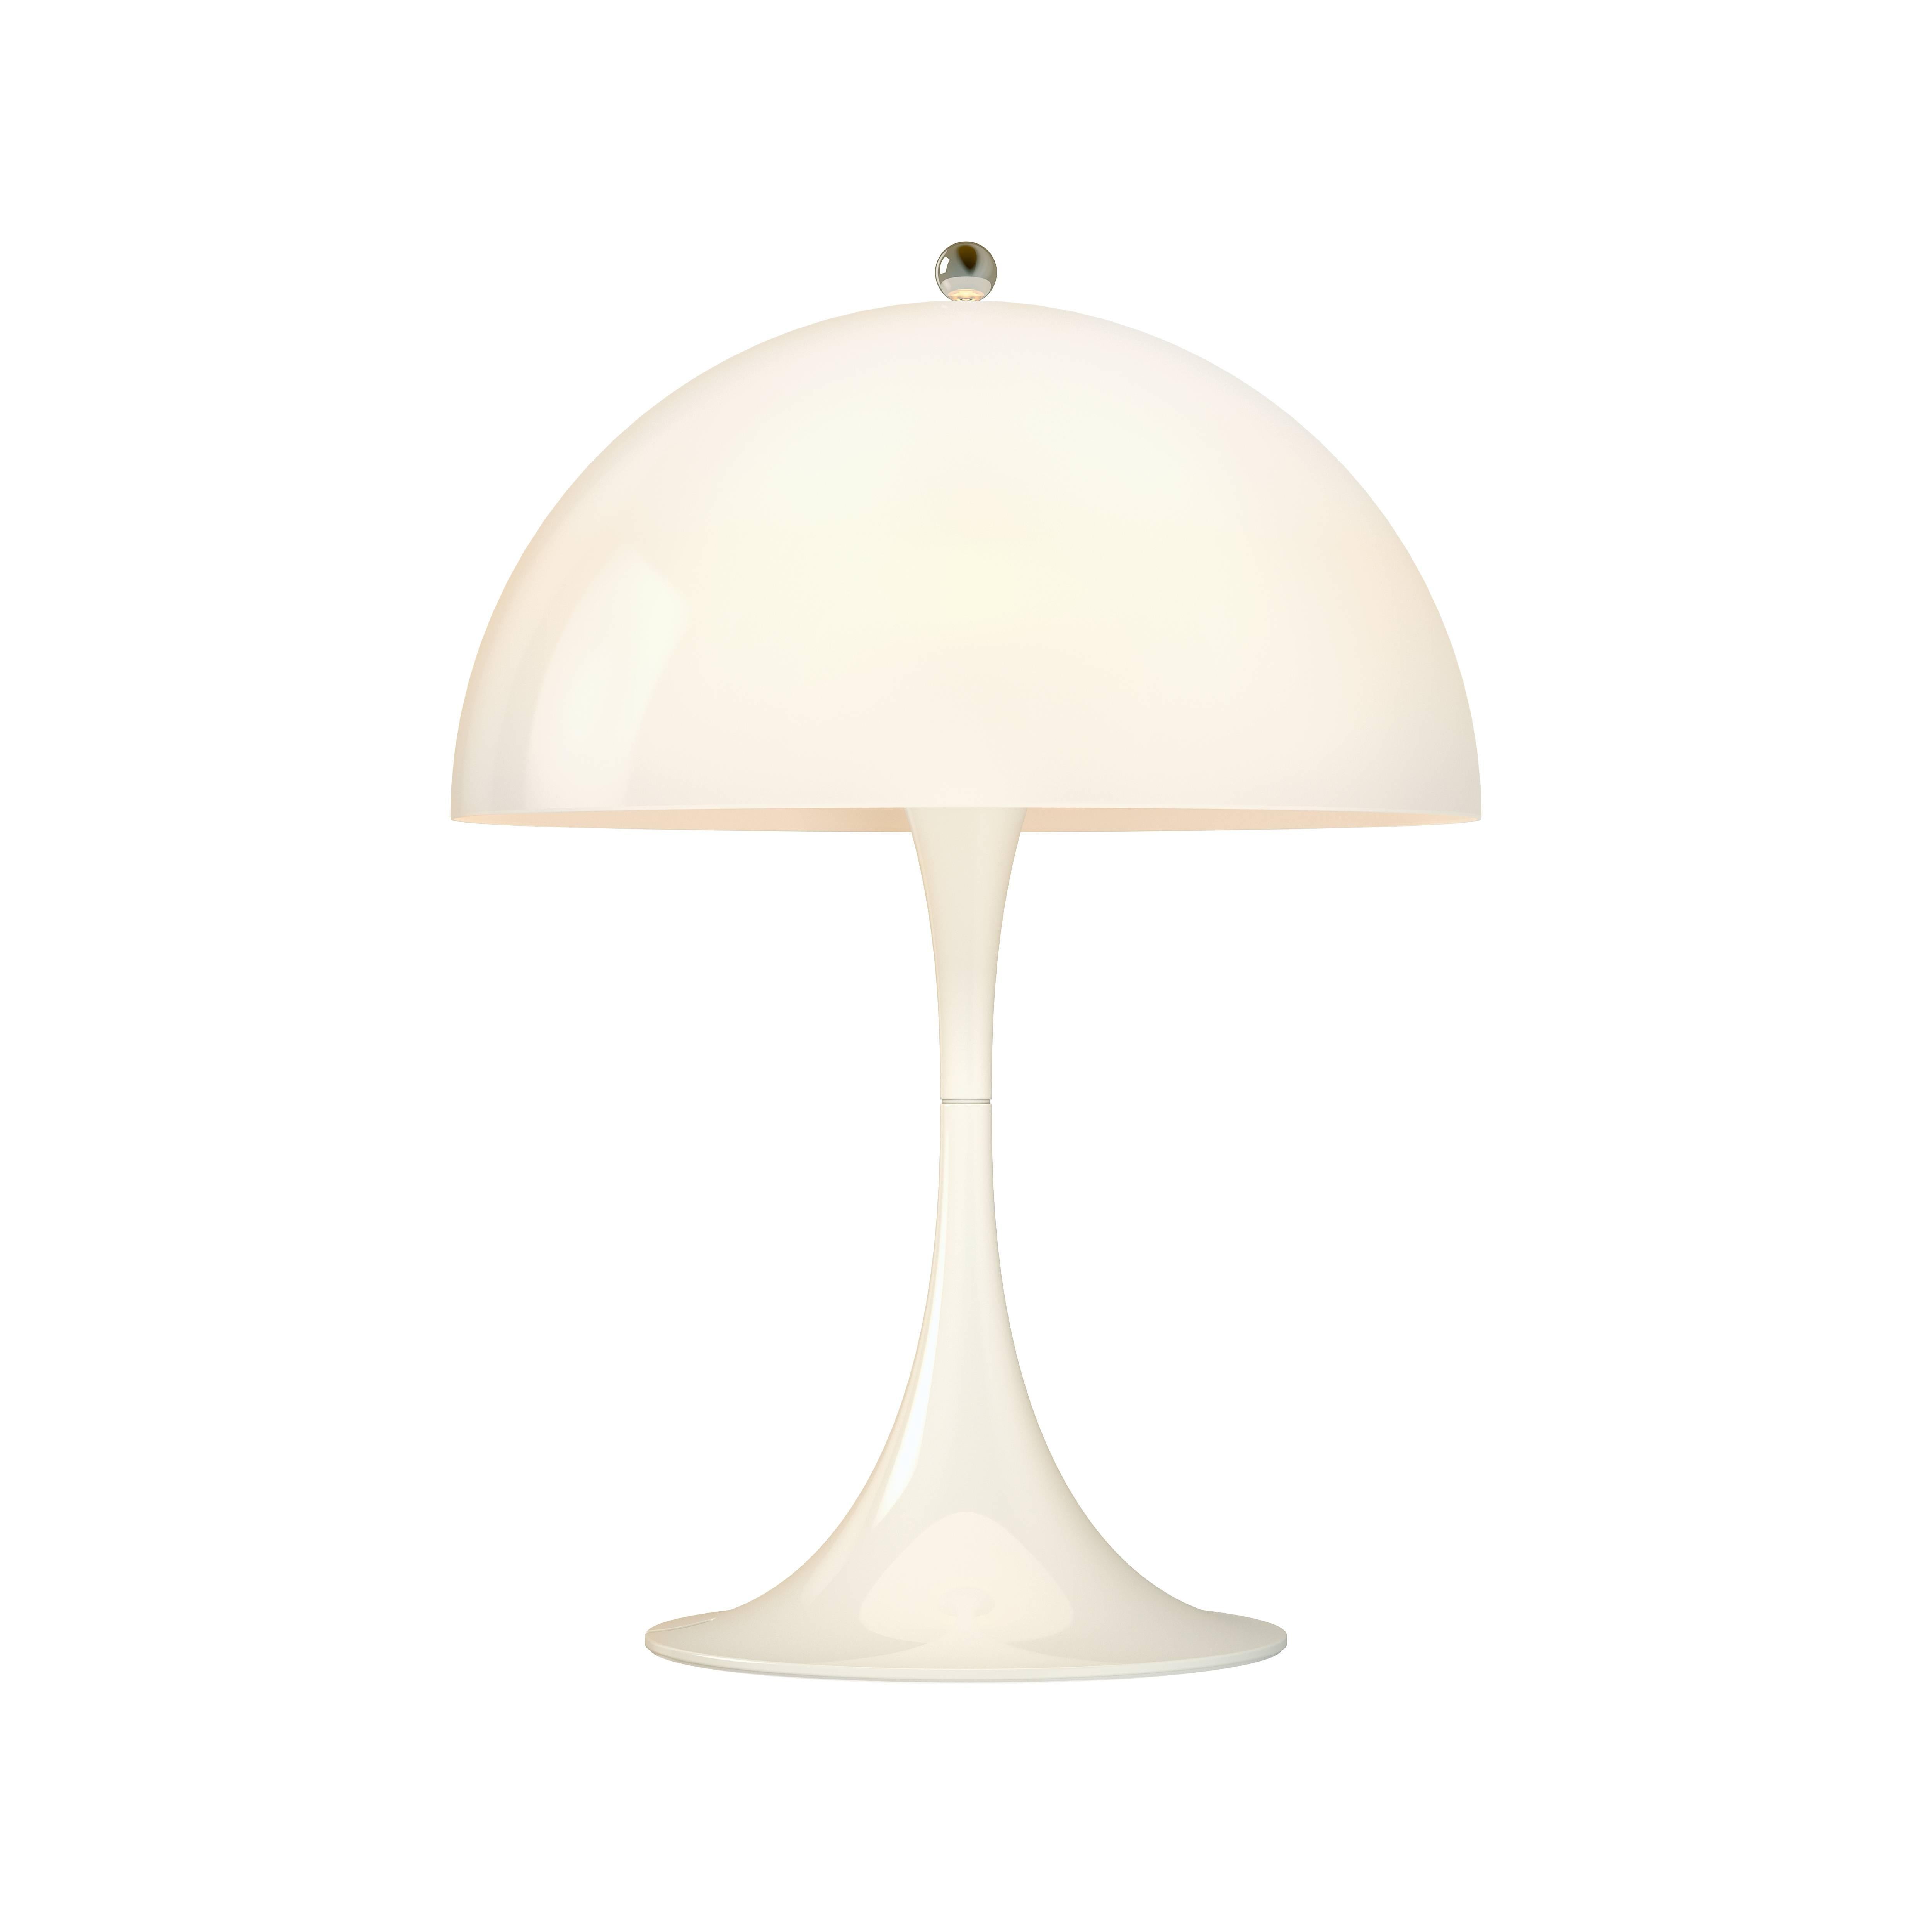 Verner Panton 'Panthella 250' Led Table Lamp in Orange for Louis Poulsen For Sale 3